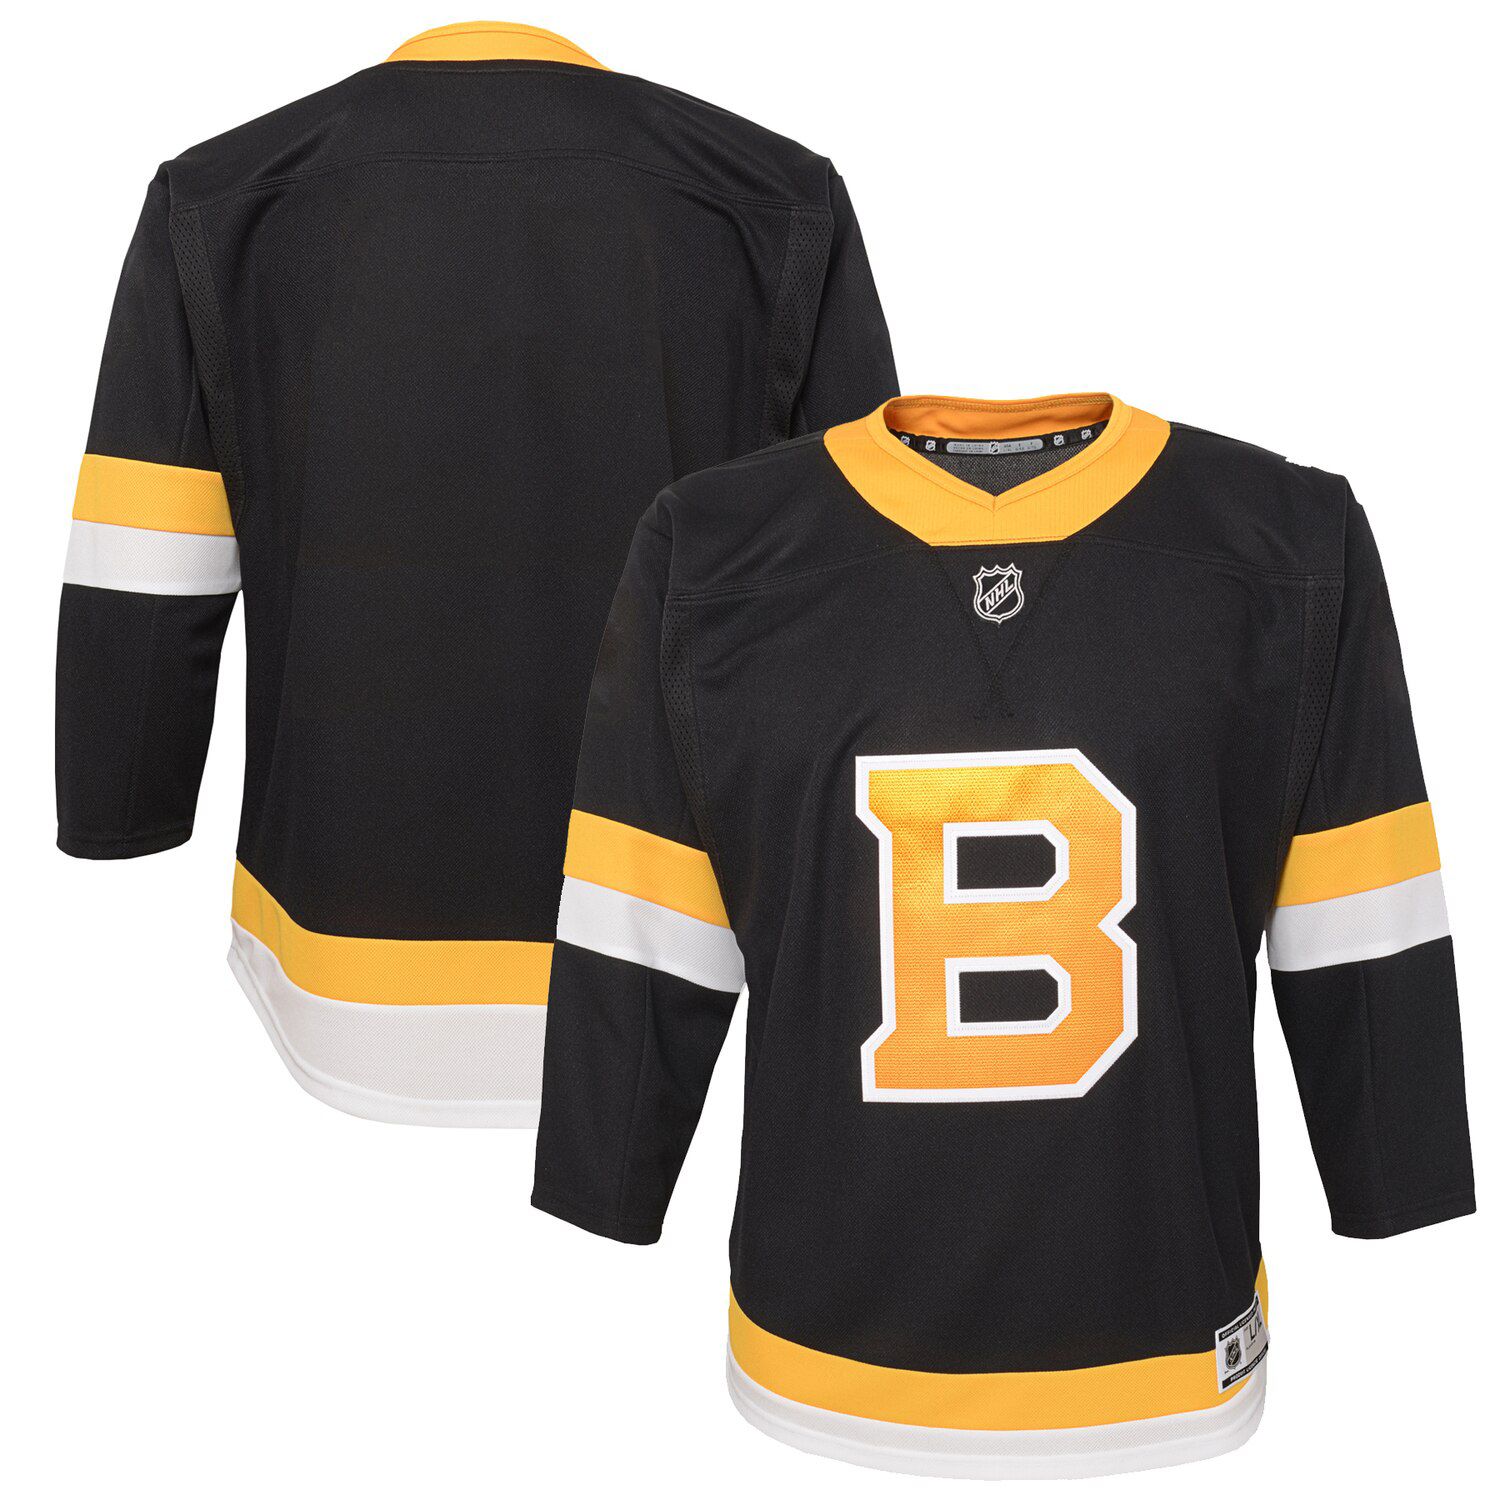 Youth Black Boston Bruins Alternate 